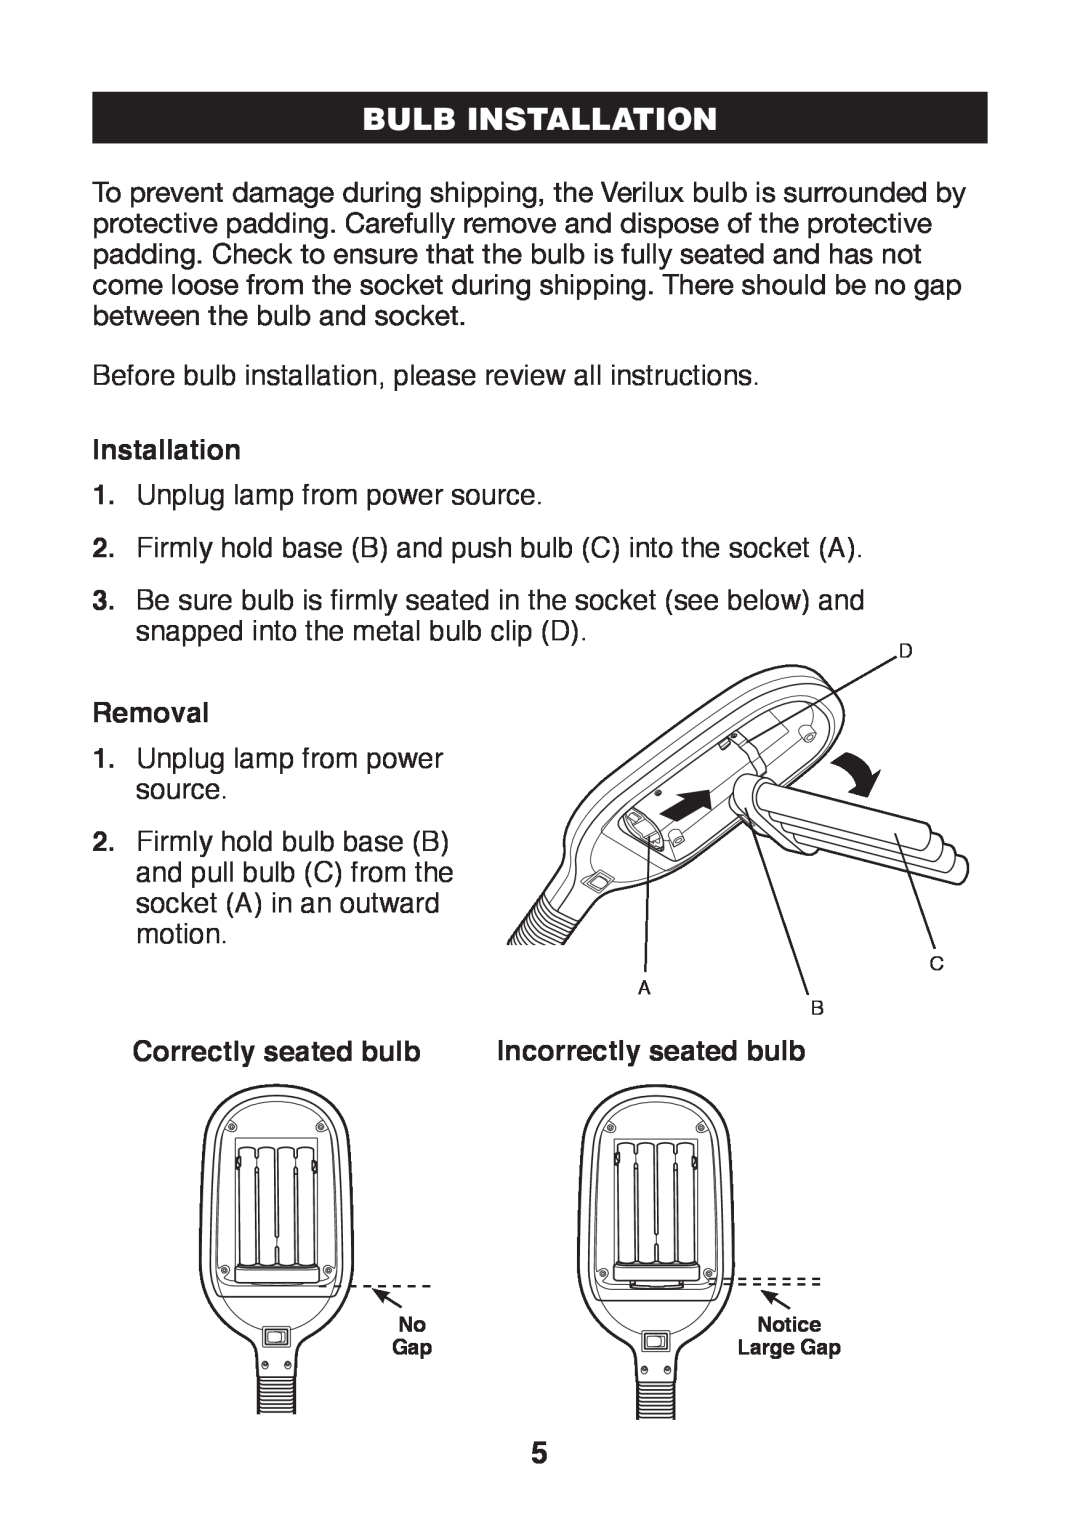 Verilux PL03 manual Bulb Installationheader, Removal, Correctly seated bulb, Incorrectly seated bulb 